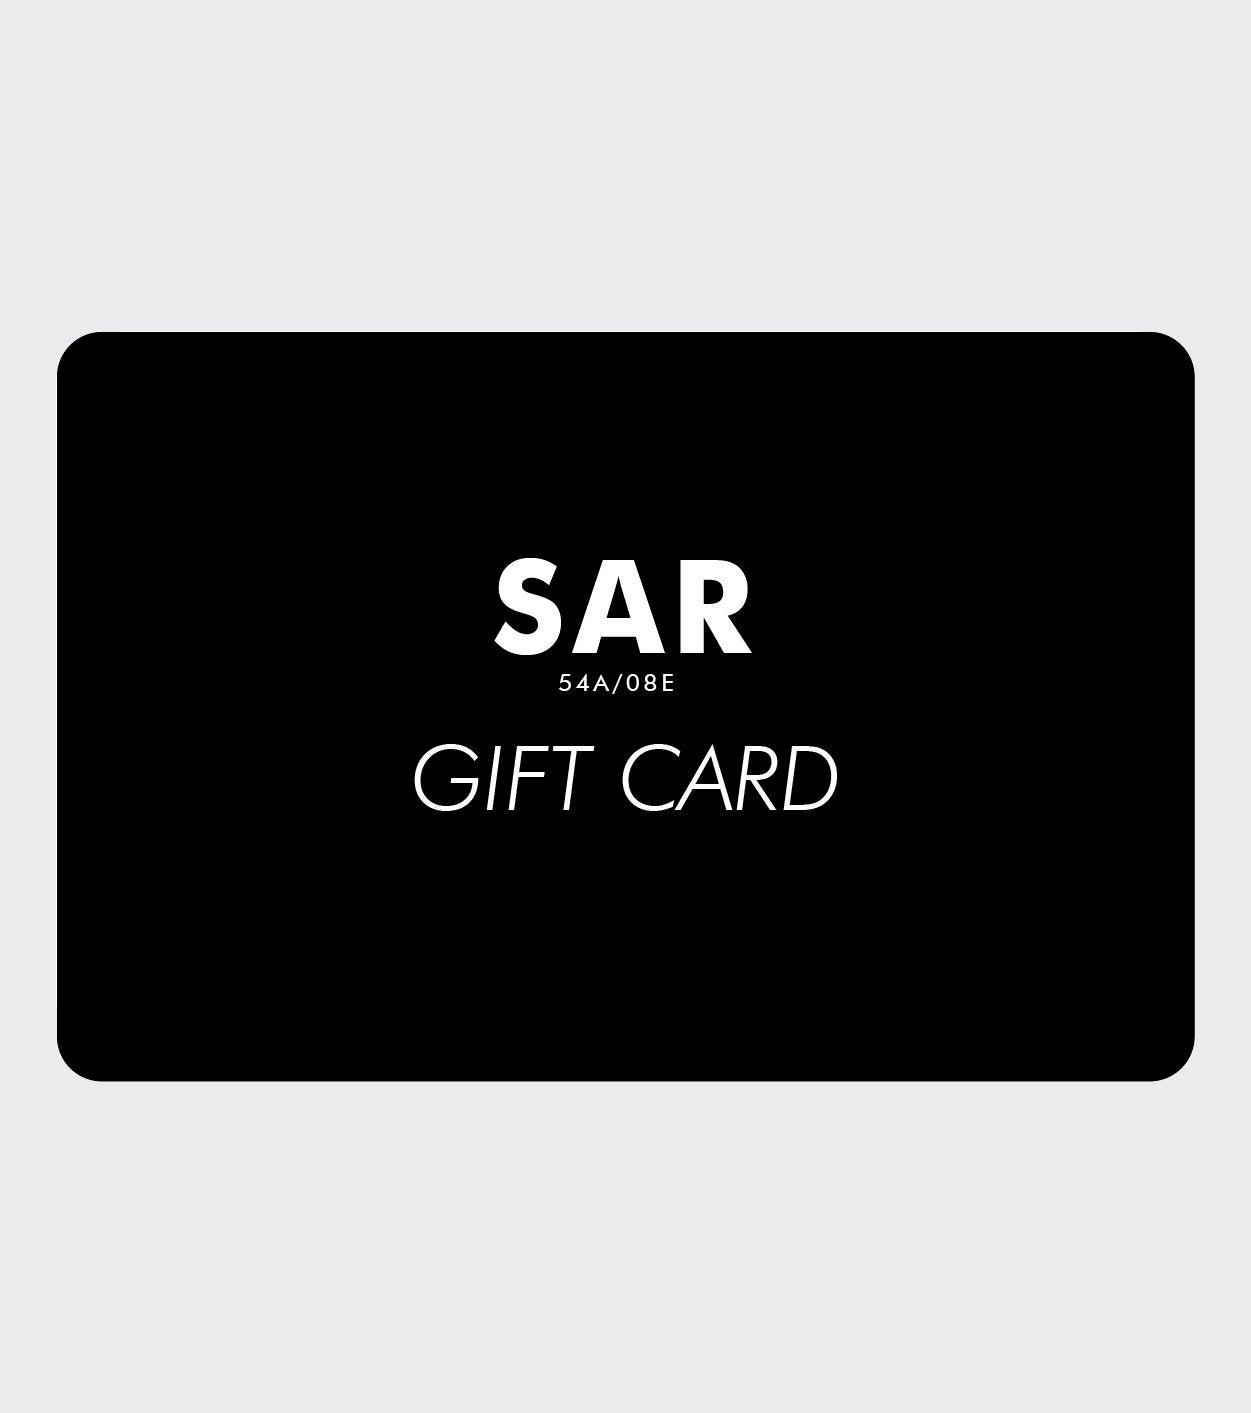 Sar jewellery gift card - Sar Jewellery